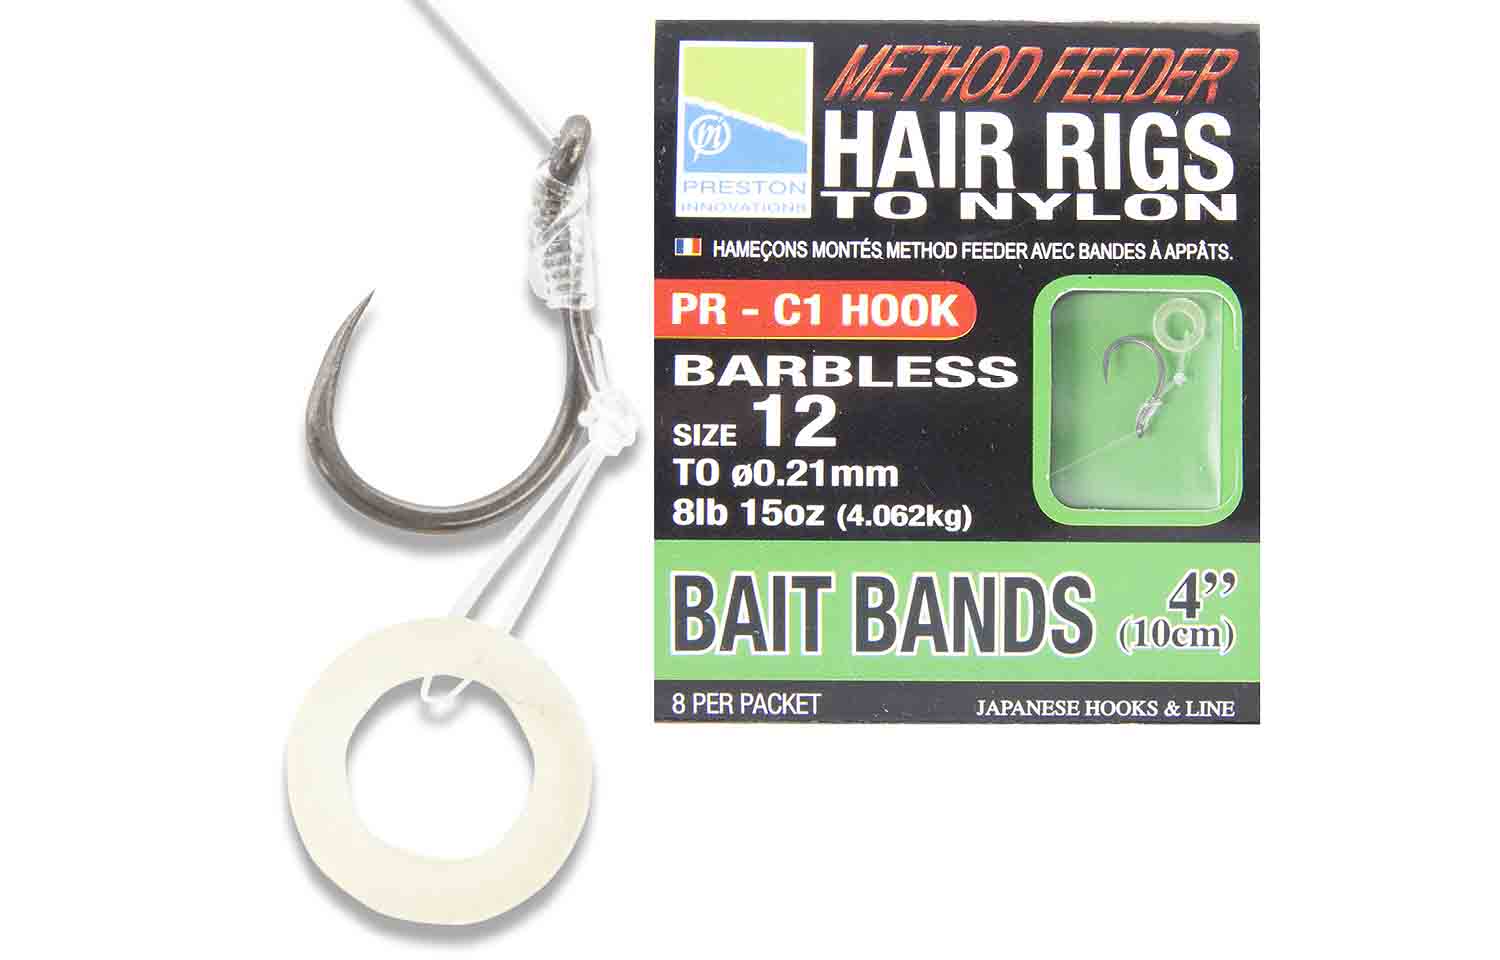 Preston Method Feeder Hair Rigs 4" BB